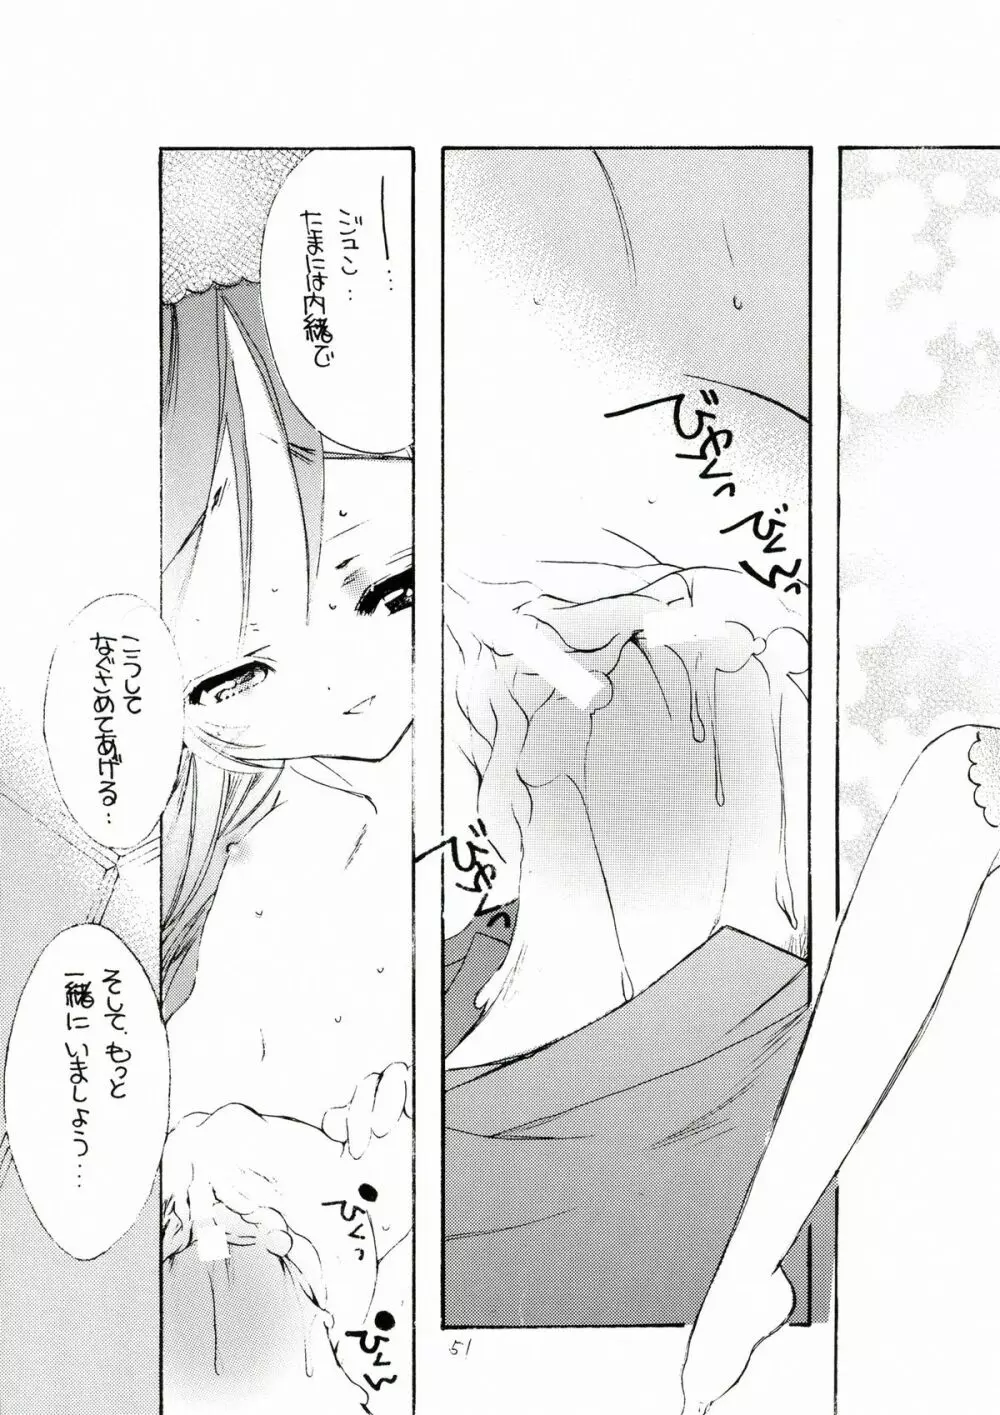 薔薇乙女。桃色日記 - page51